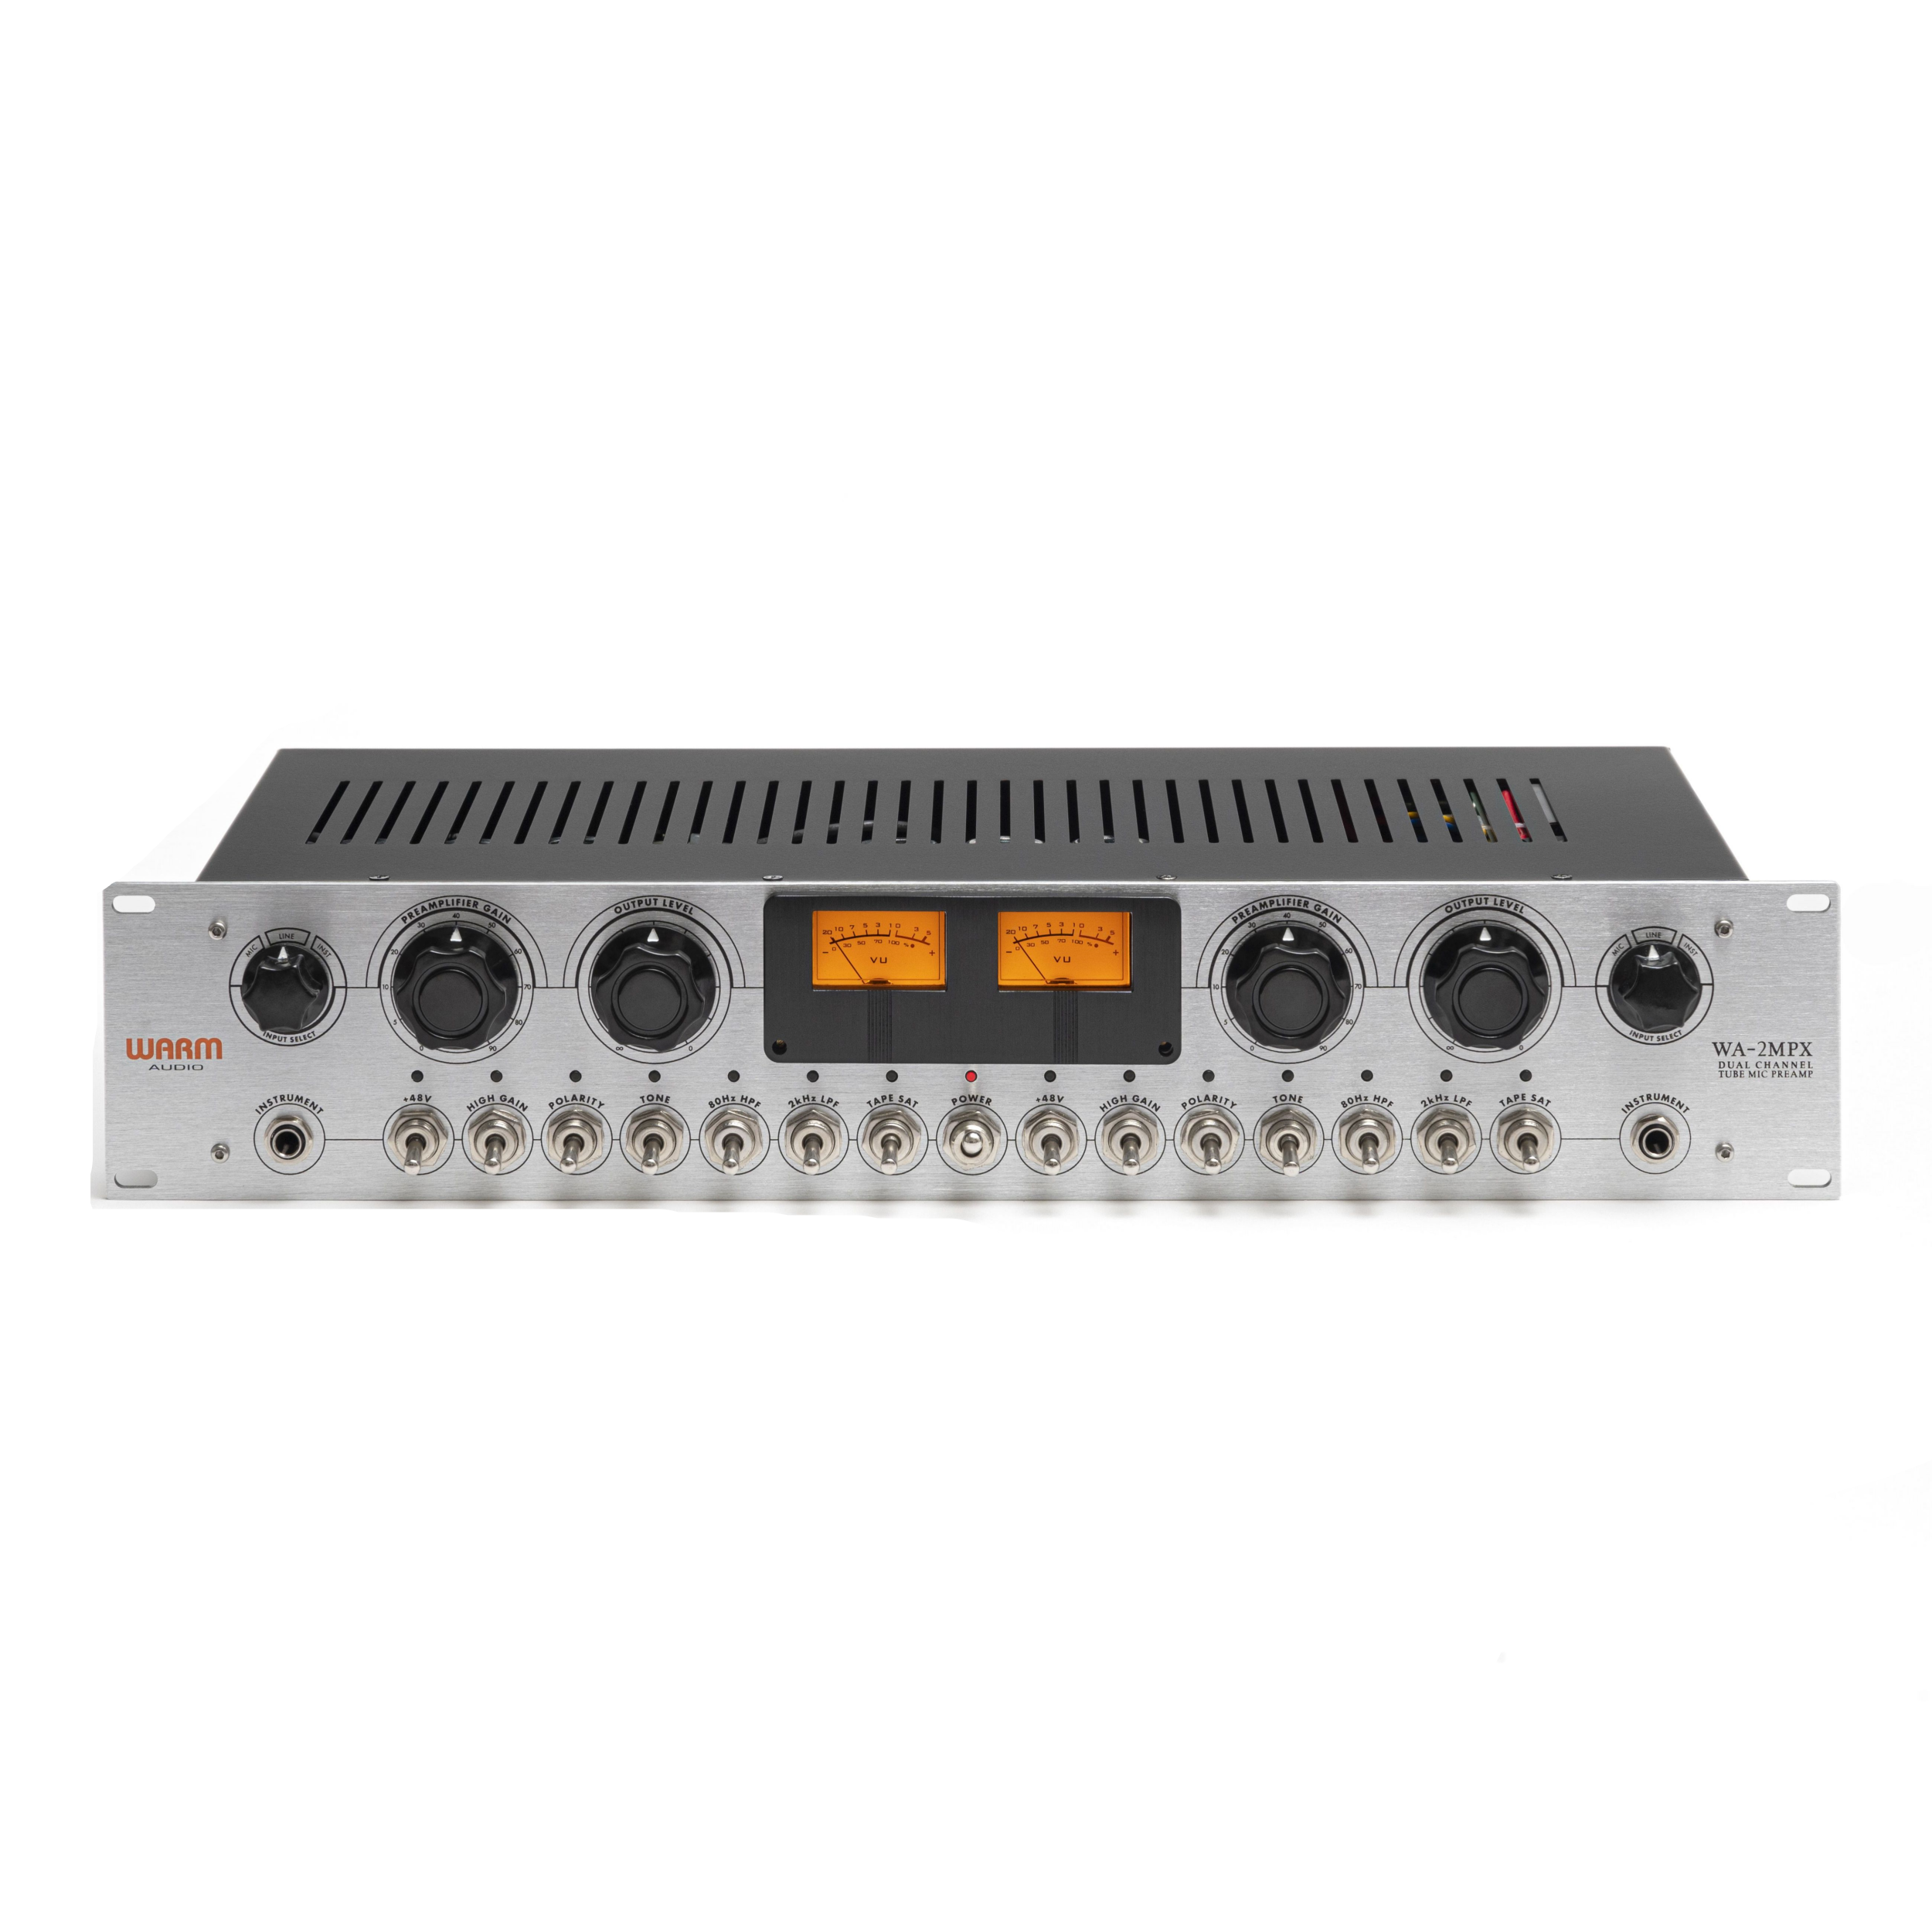 Warm Audio WA-2MPX по цене 189 400 ₽